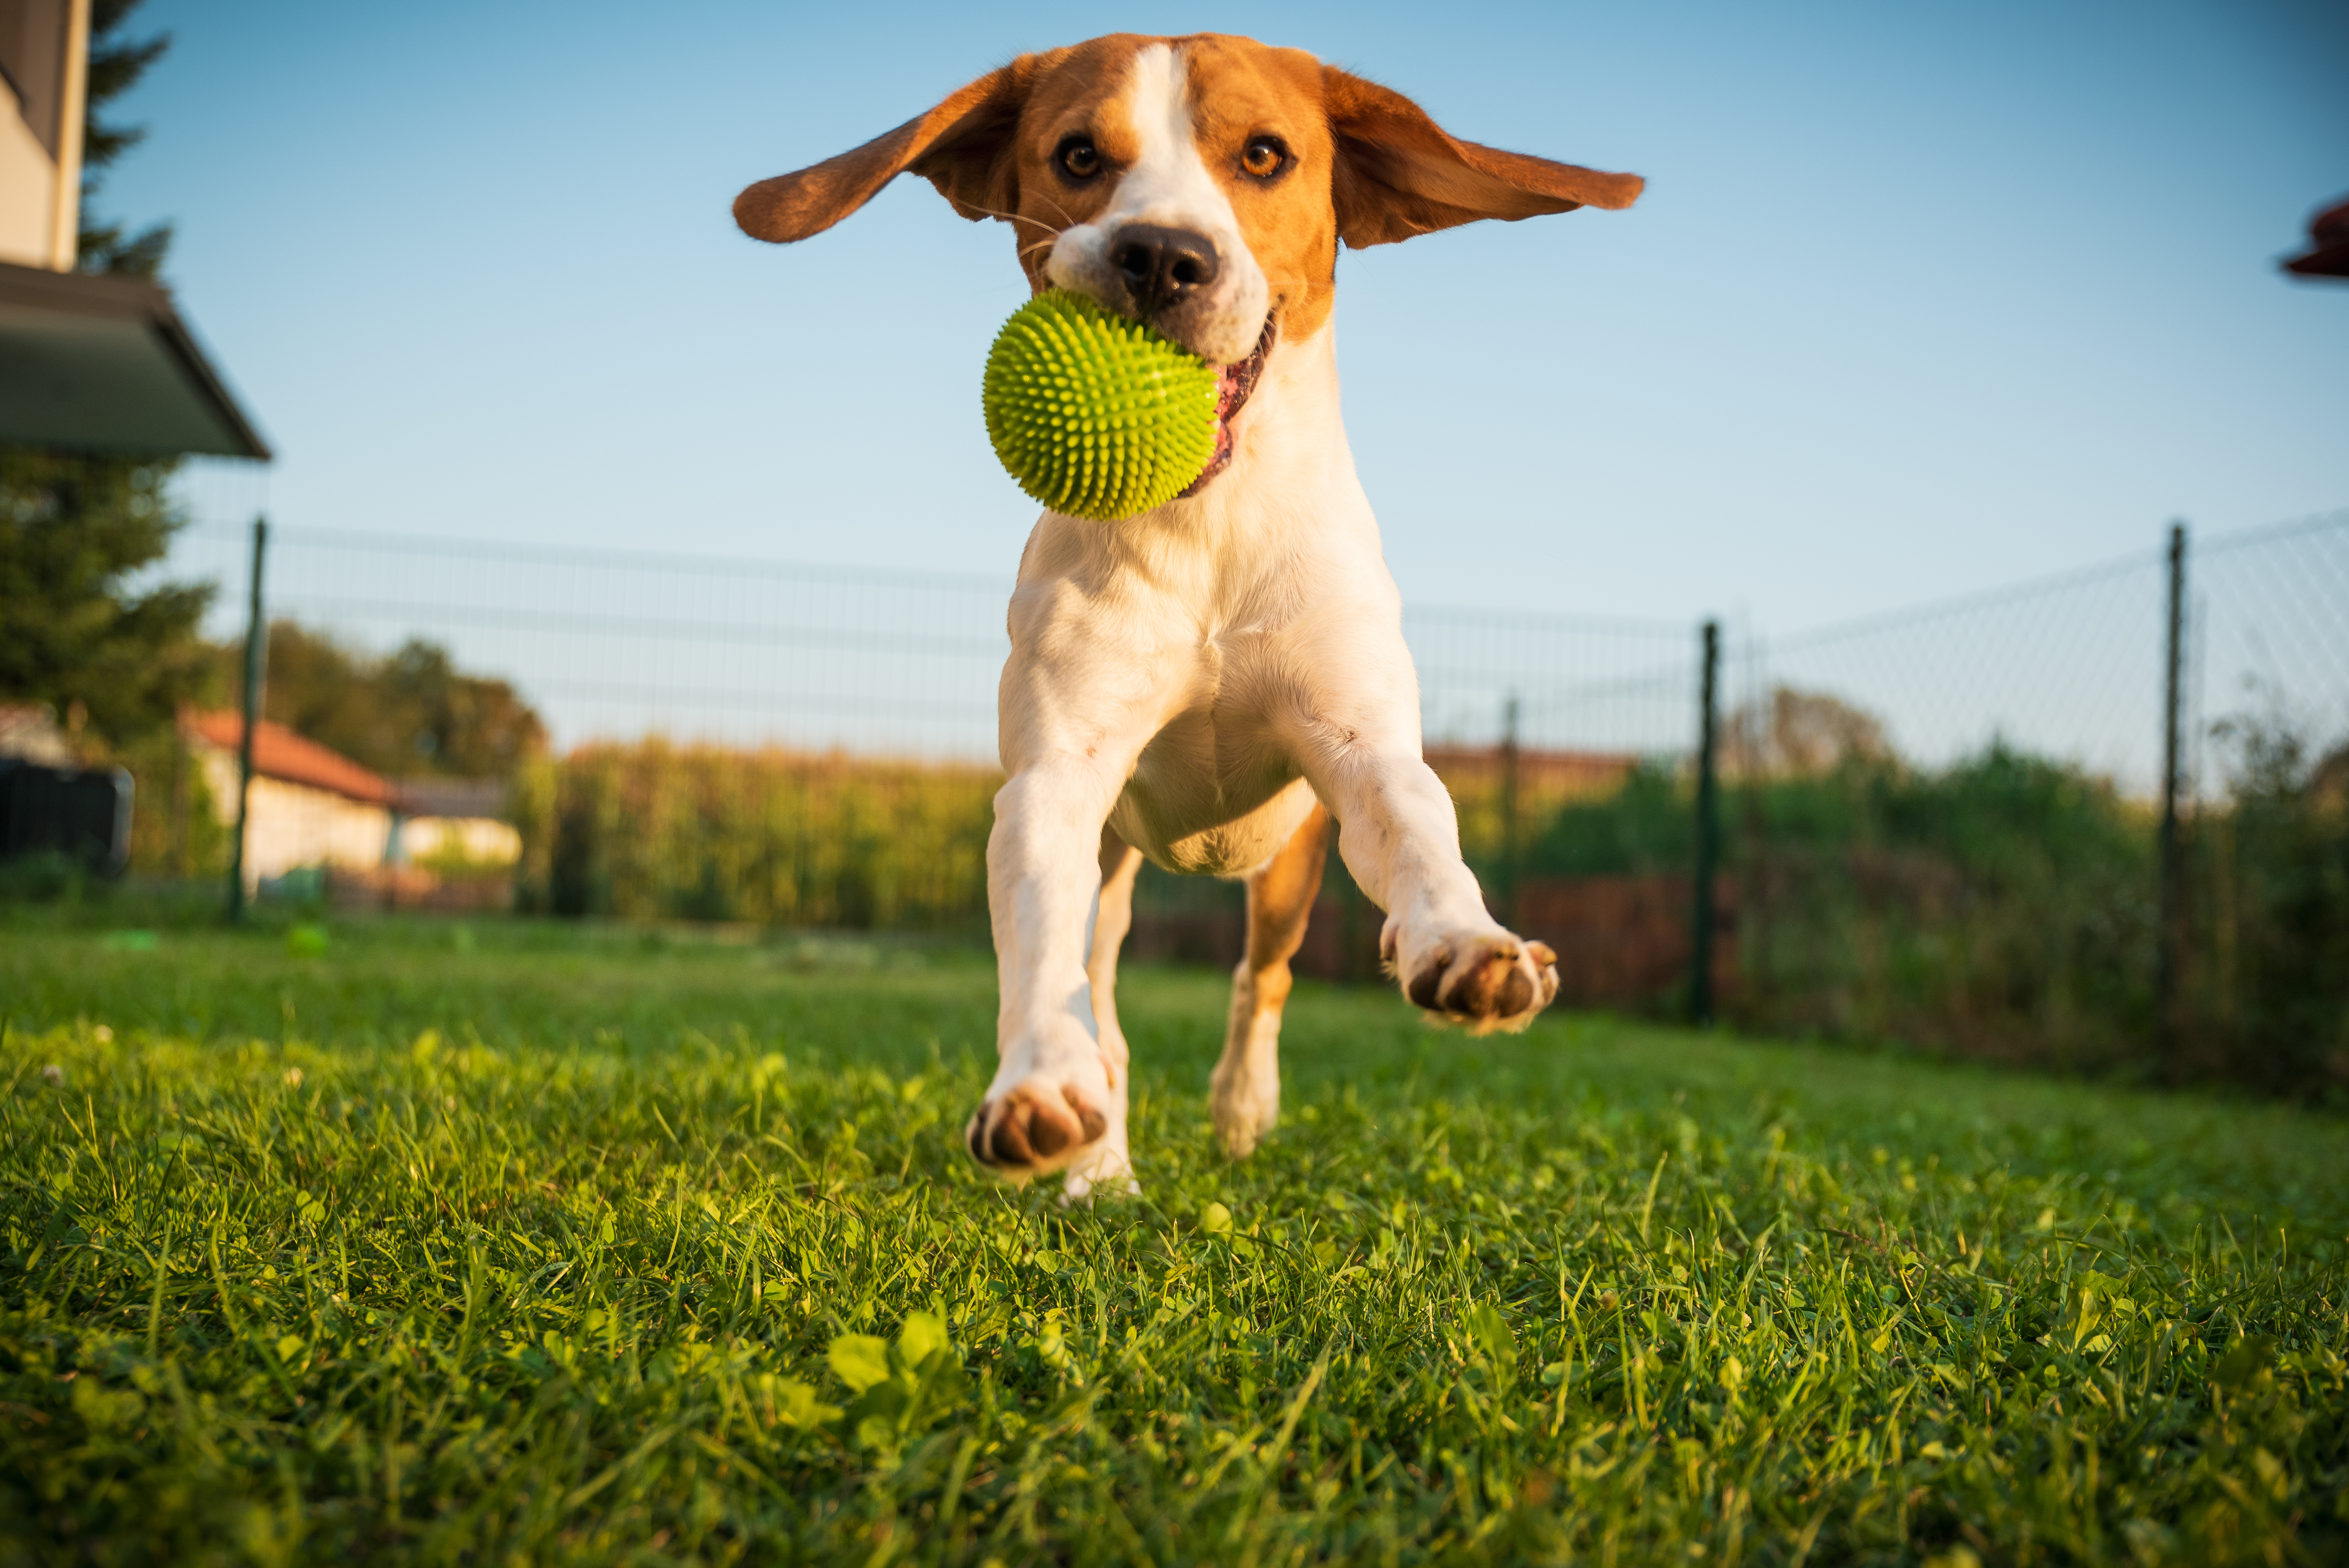 Dog beagle purebred running with a green ball on grass